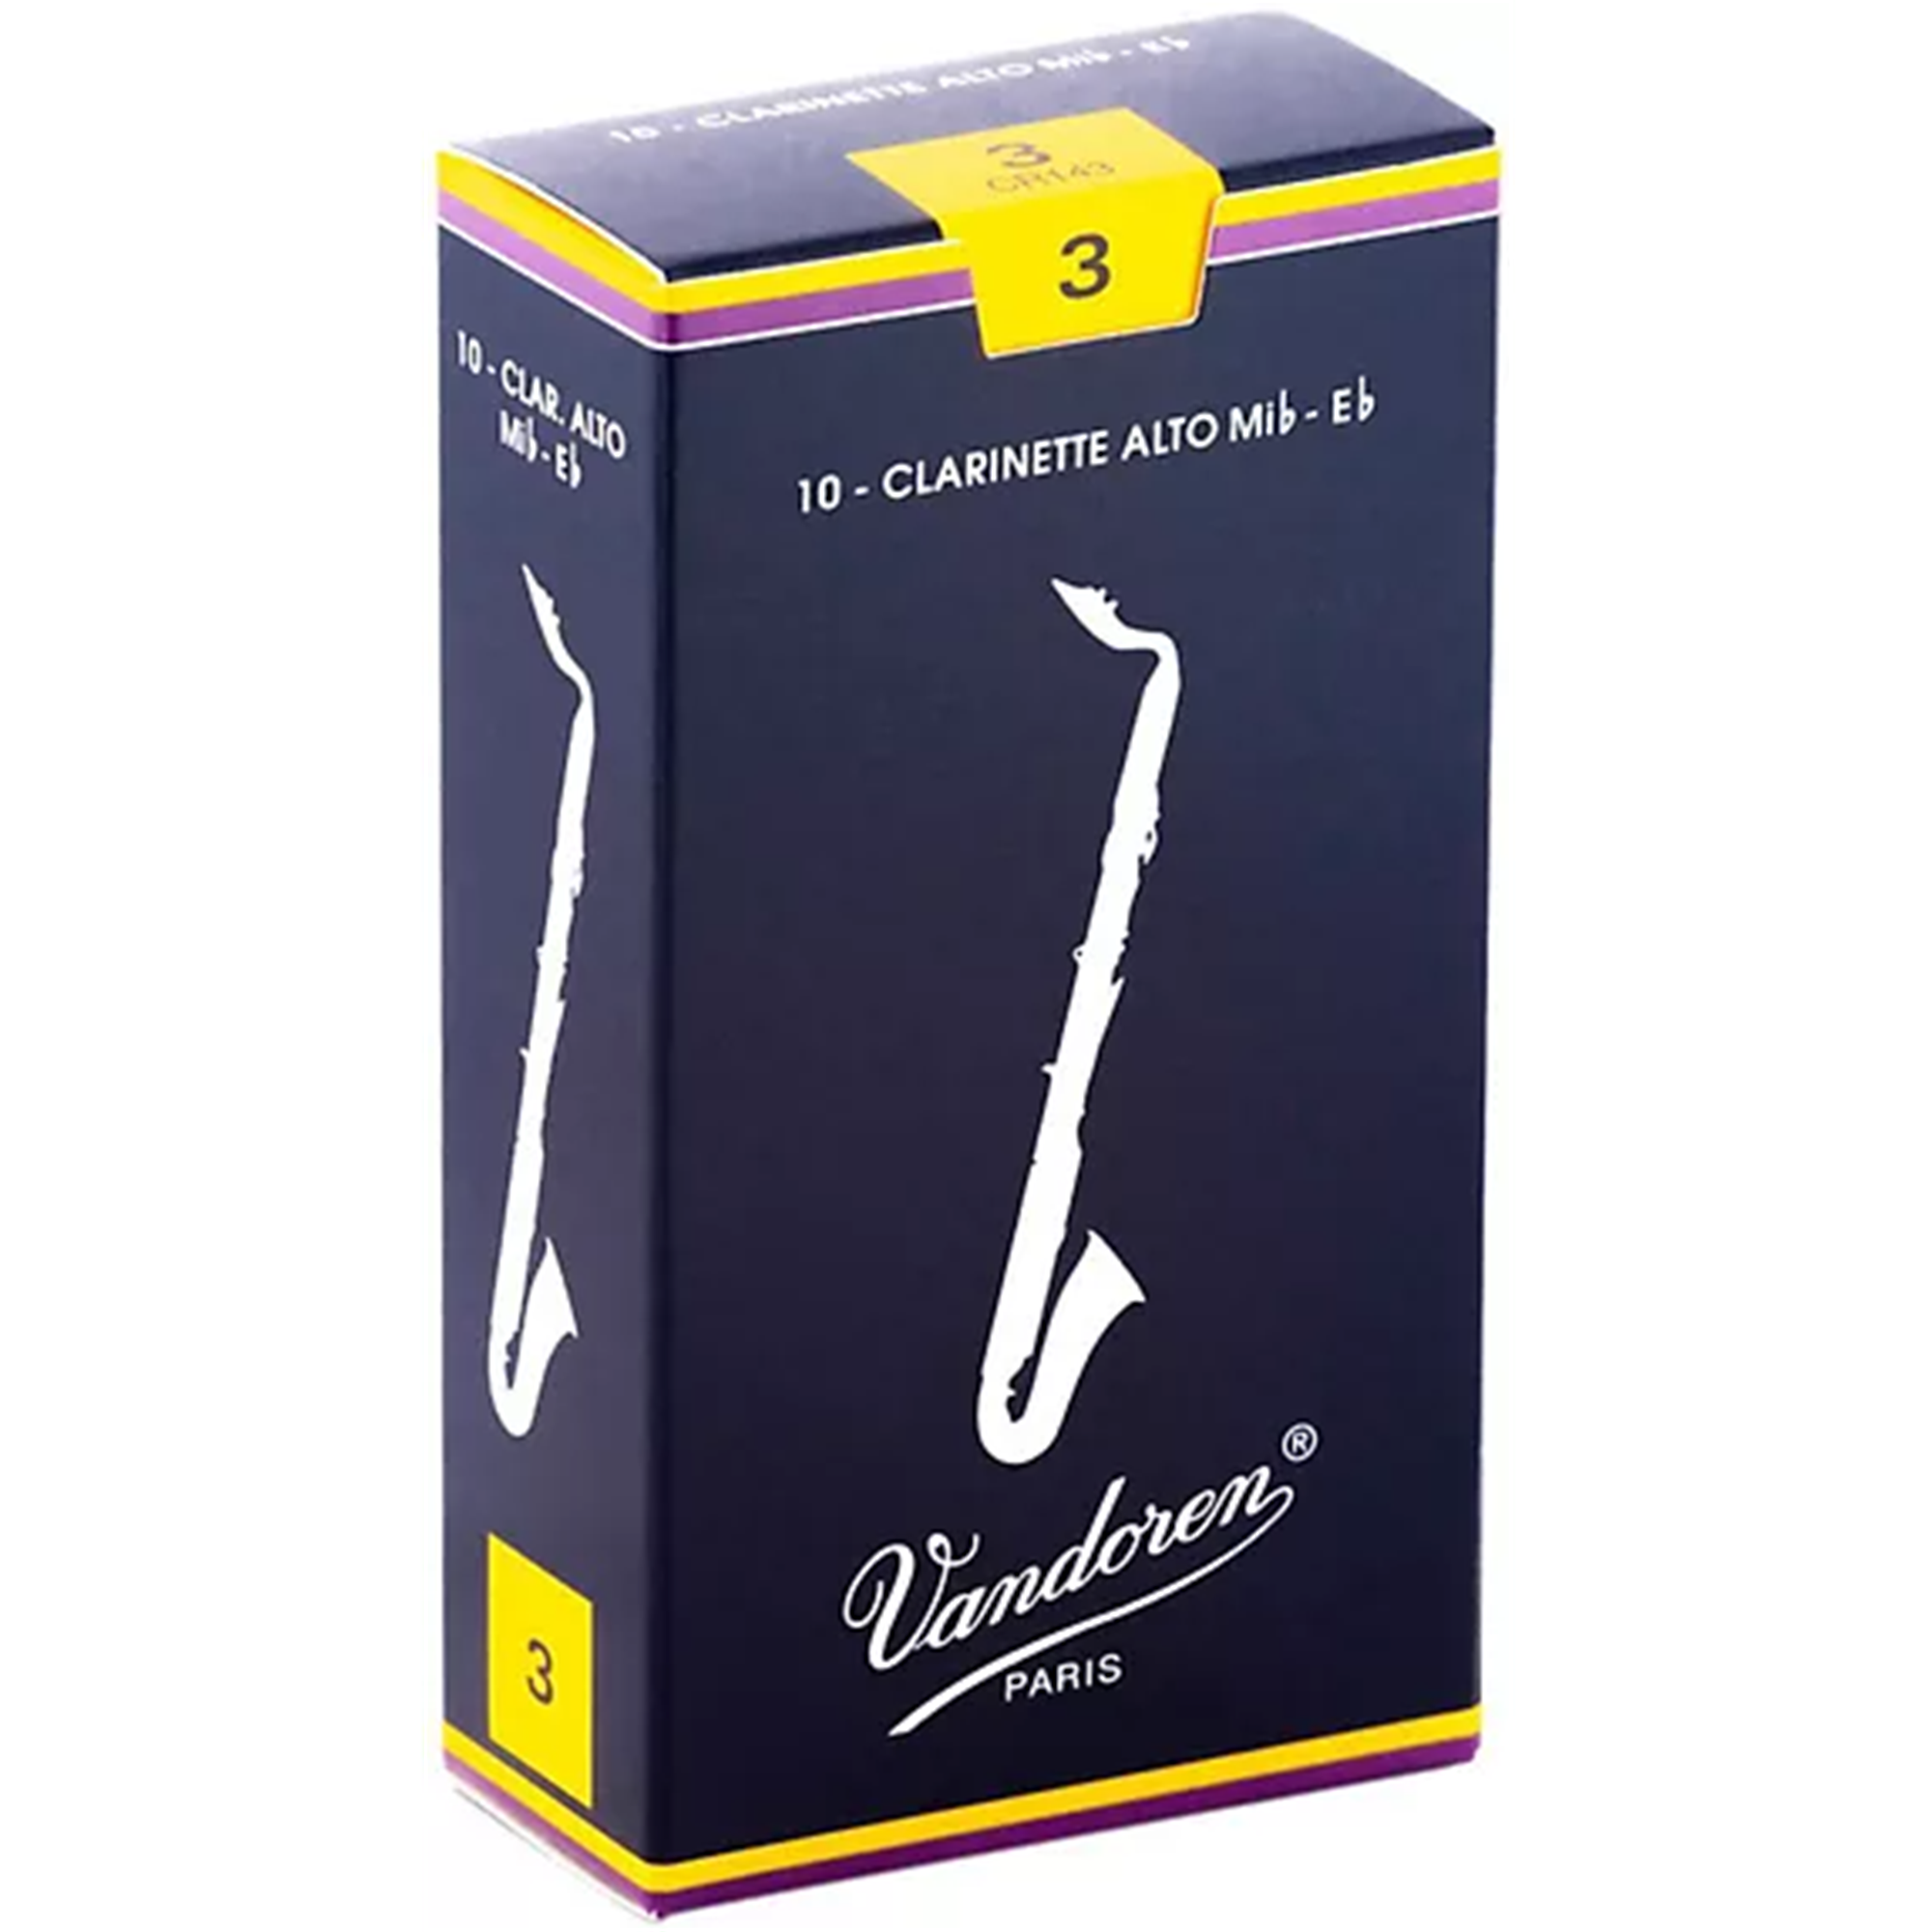 VANDOREN CR143 #3 Alto Clarinet Reeds, Box of 10